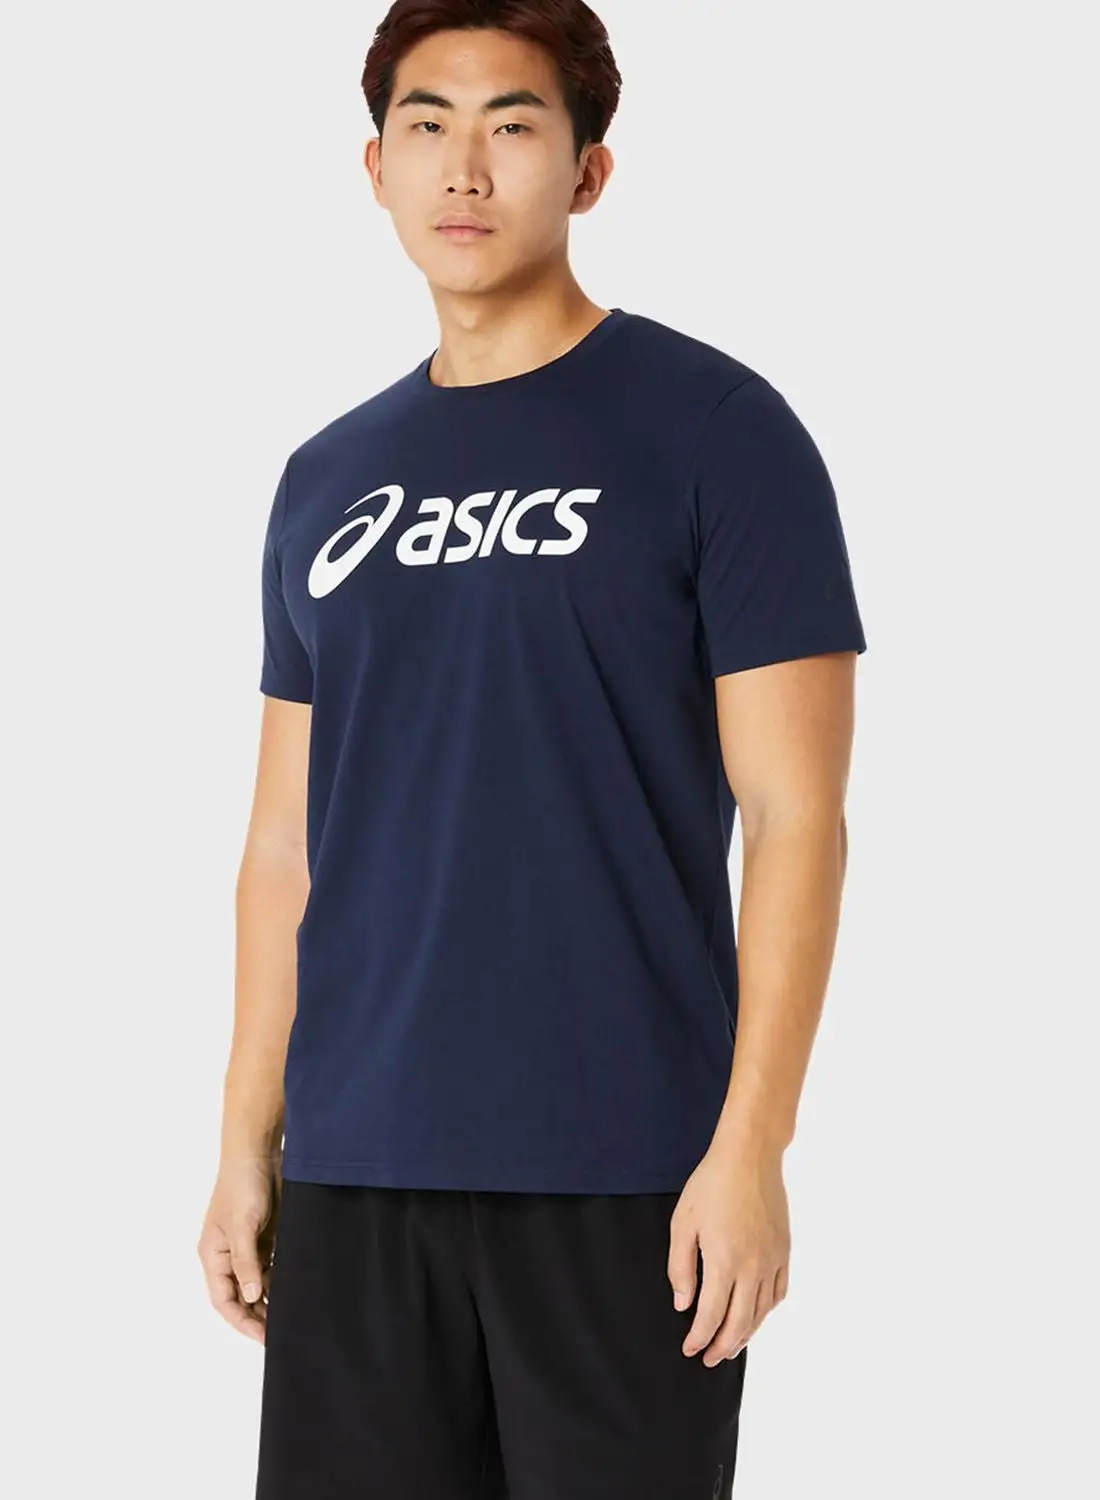 asics Graphic T-Shirt